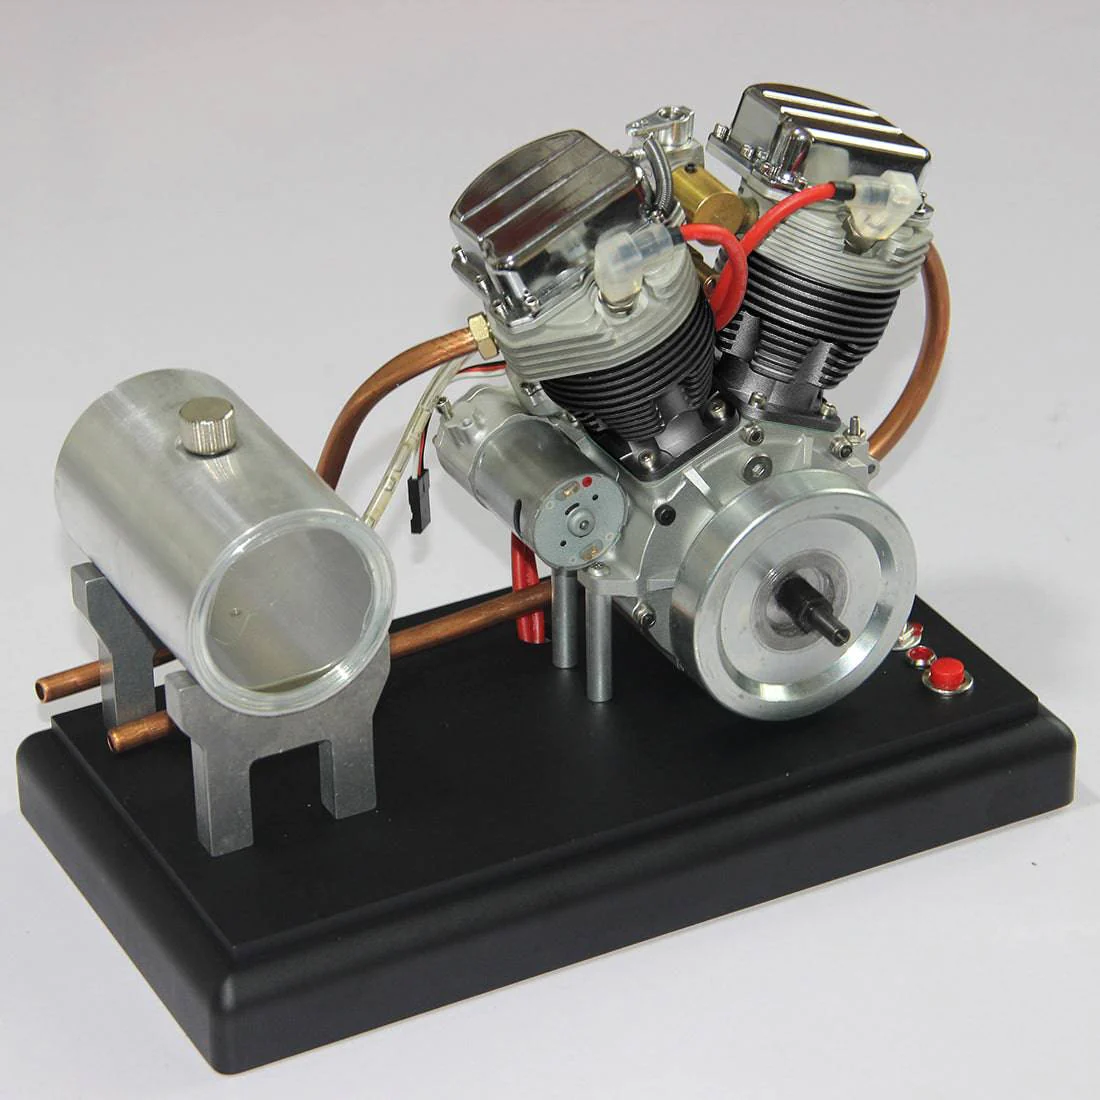 CISON FG-VT9 V2 9cc Four-Stroke Gasoline Engine Model with Metal Base Fuel Tank Full Set 1